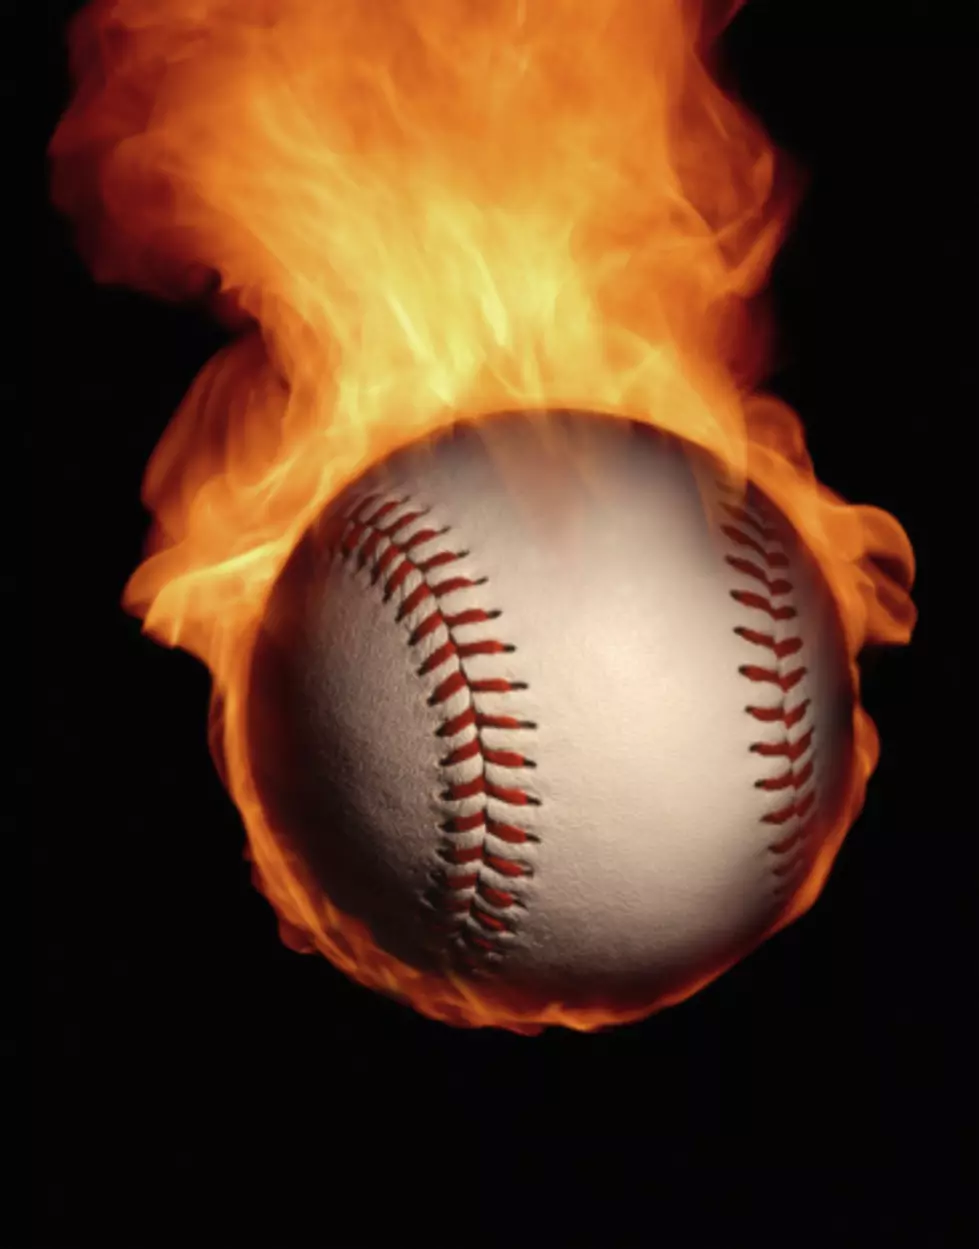 So, Kris Bryant is Just Fielding Flaming Baseballs, No Big Deal